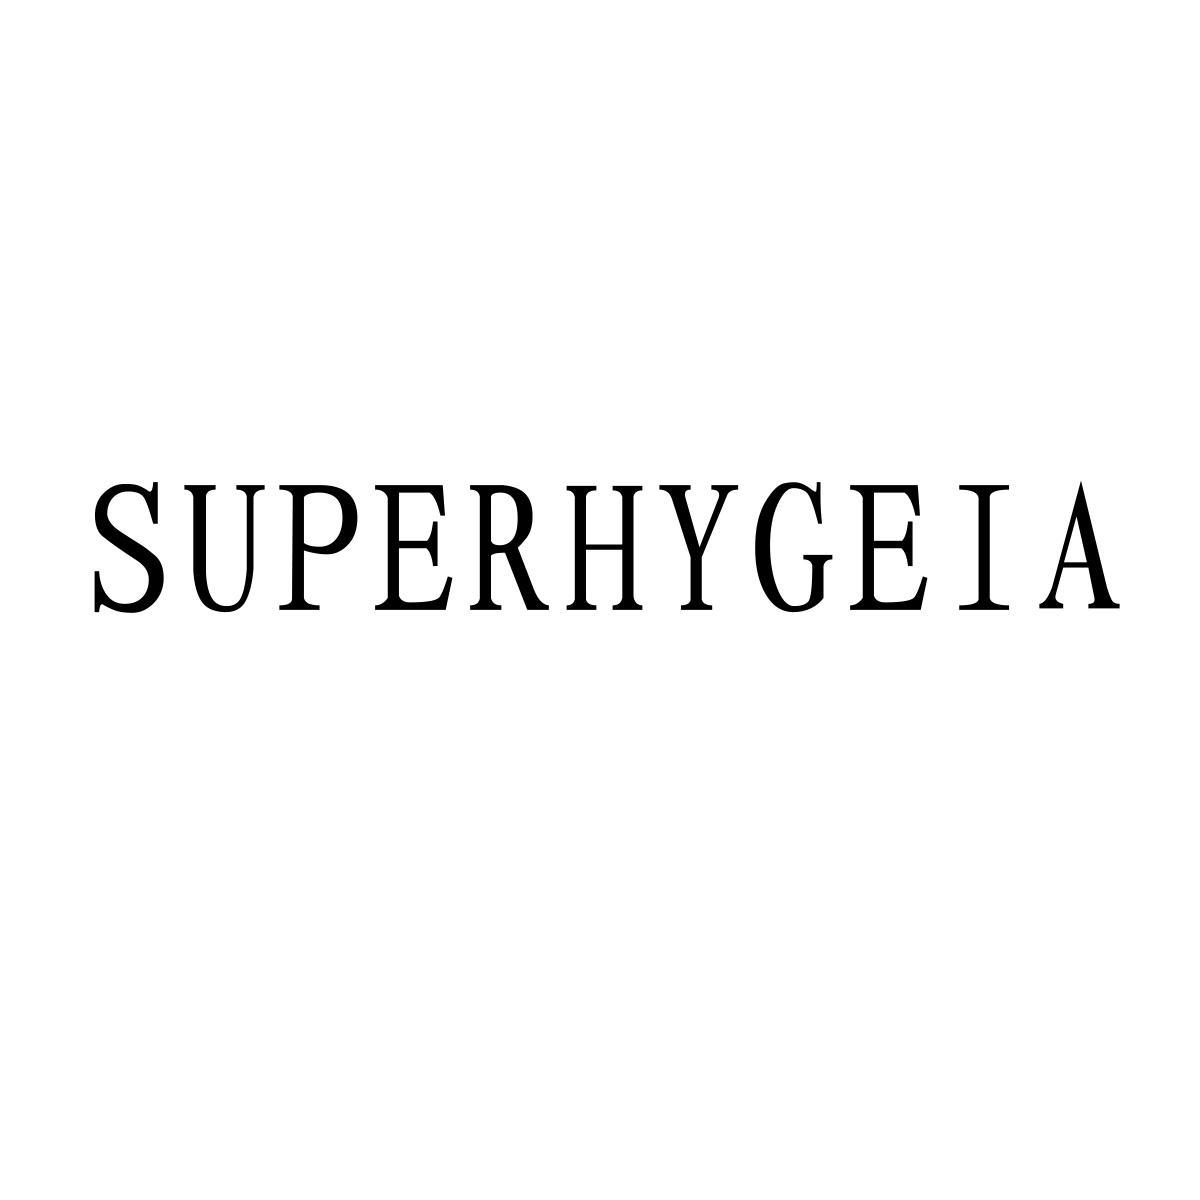 SUPERHYGEIA